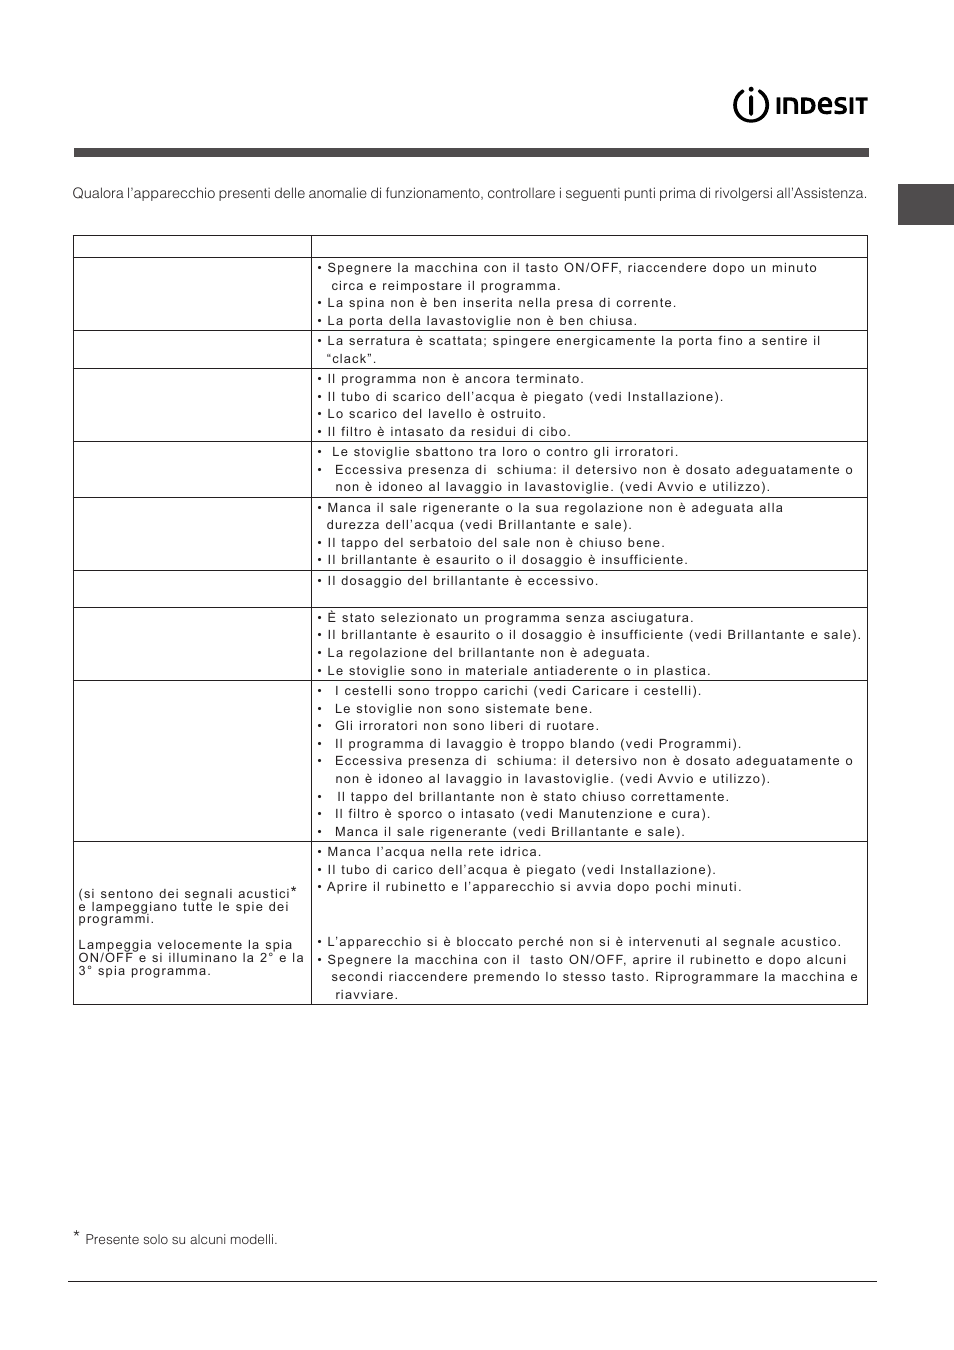 Anomalie e rimedi | Indesit DIF-14B1-EU User Manual | Page 13 / 84